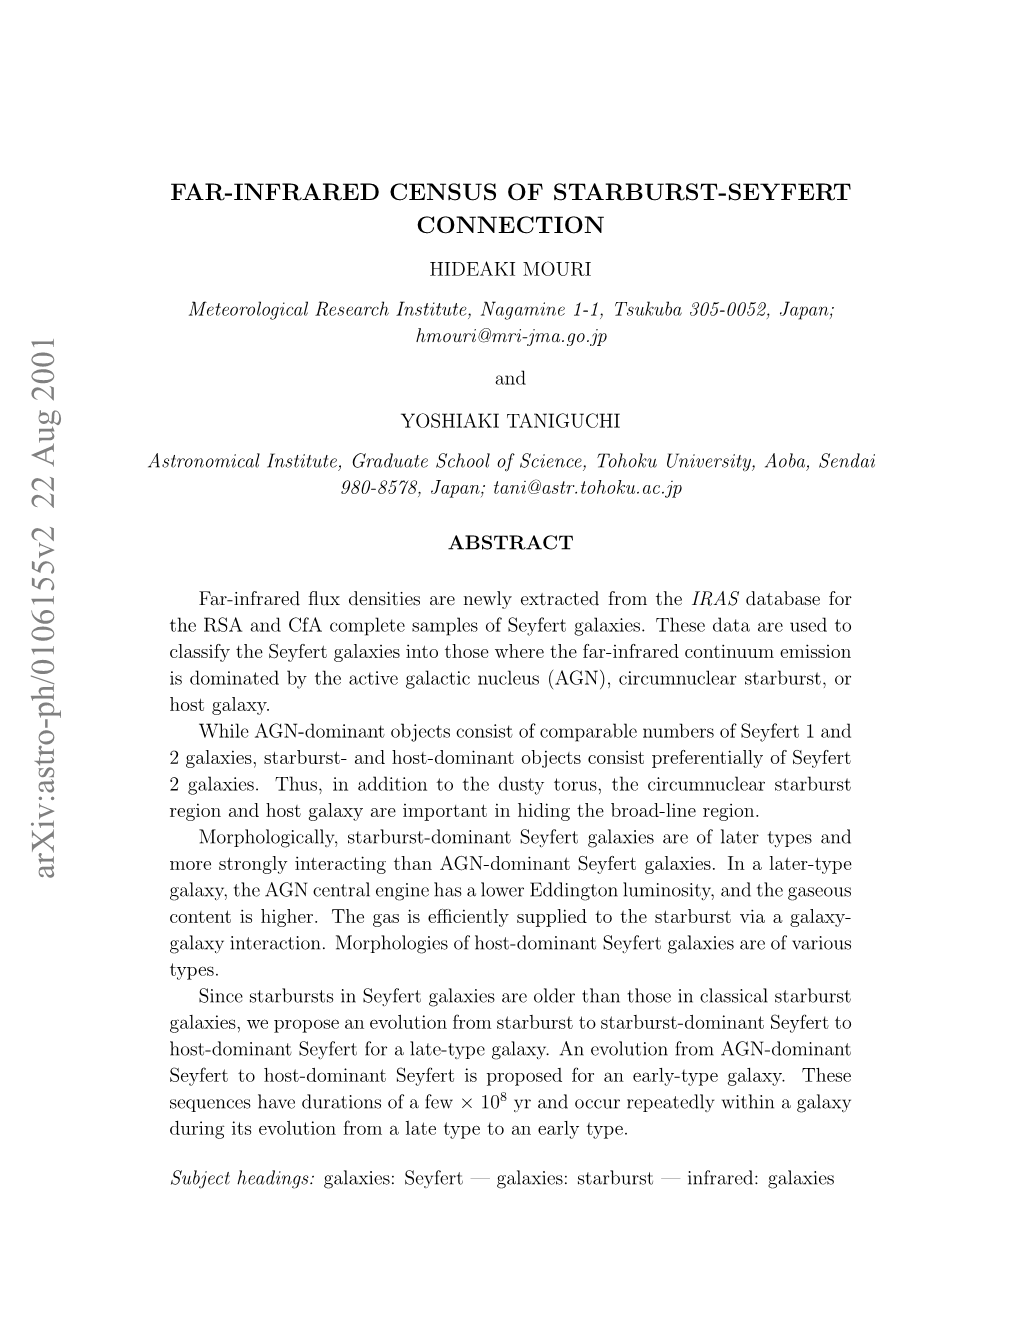 Far-Infrared Census of Starburst-Seyfert Connection